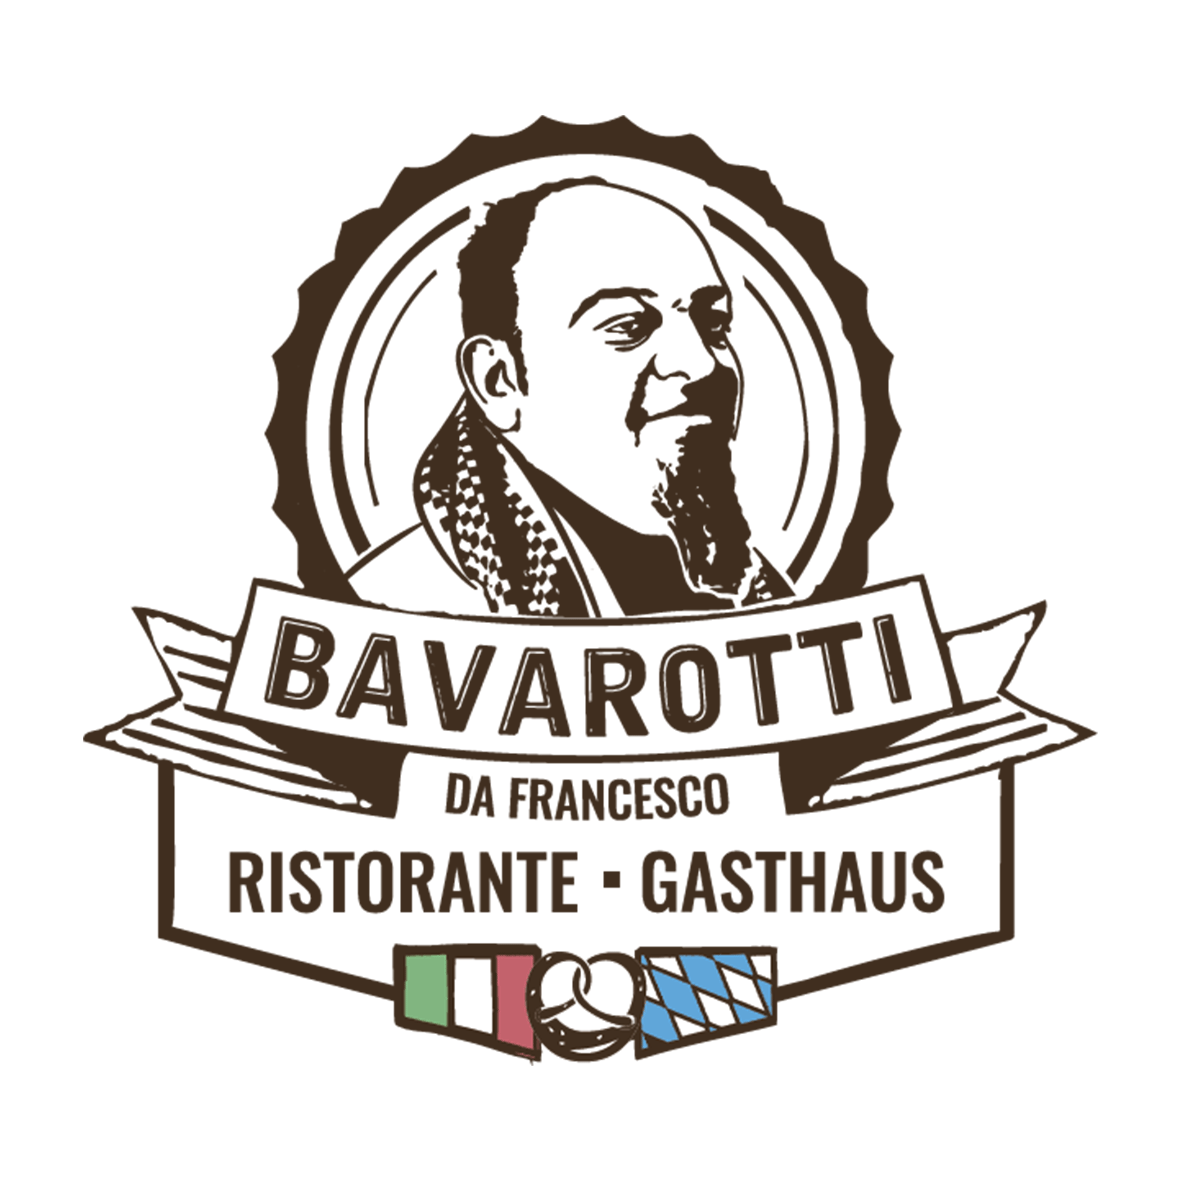 Bavarotti